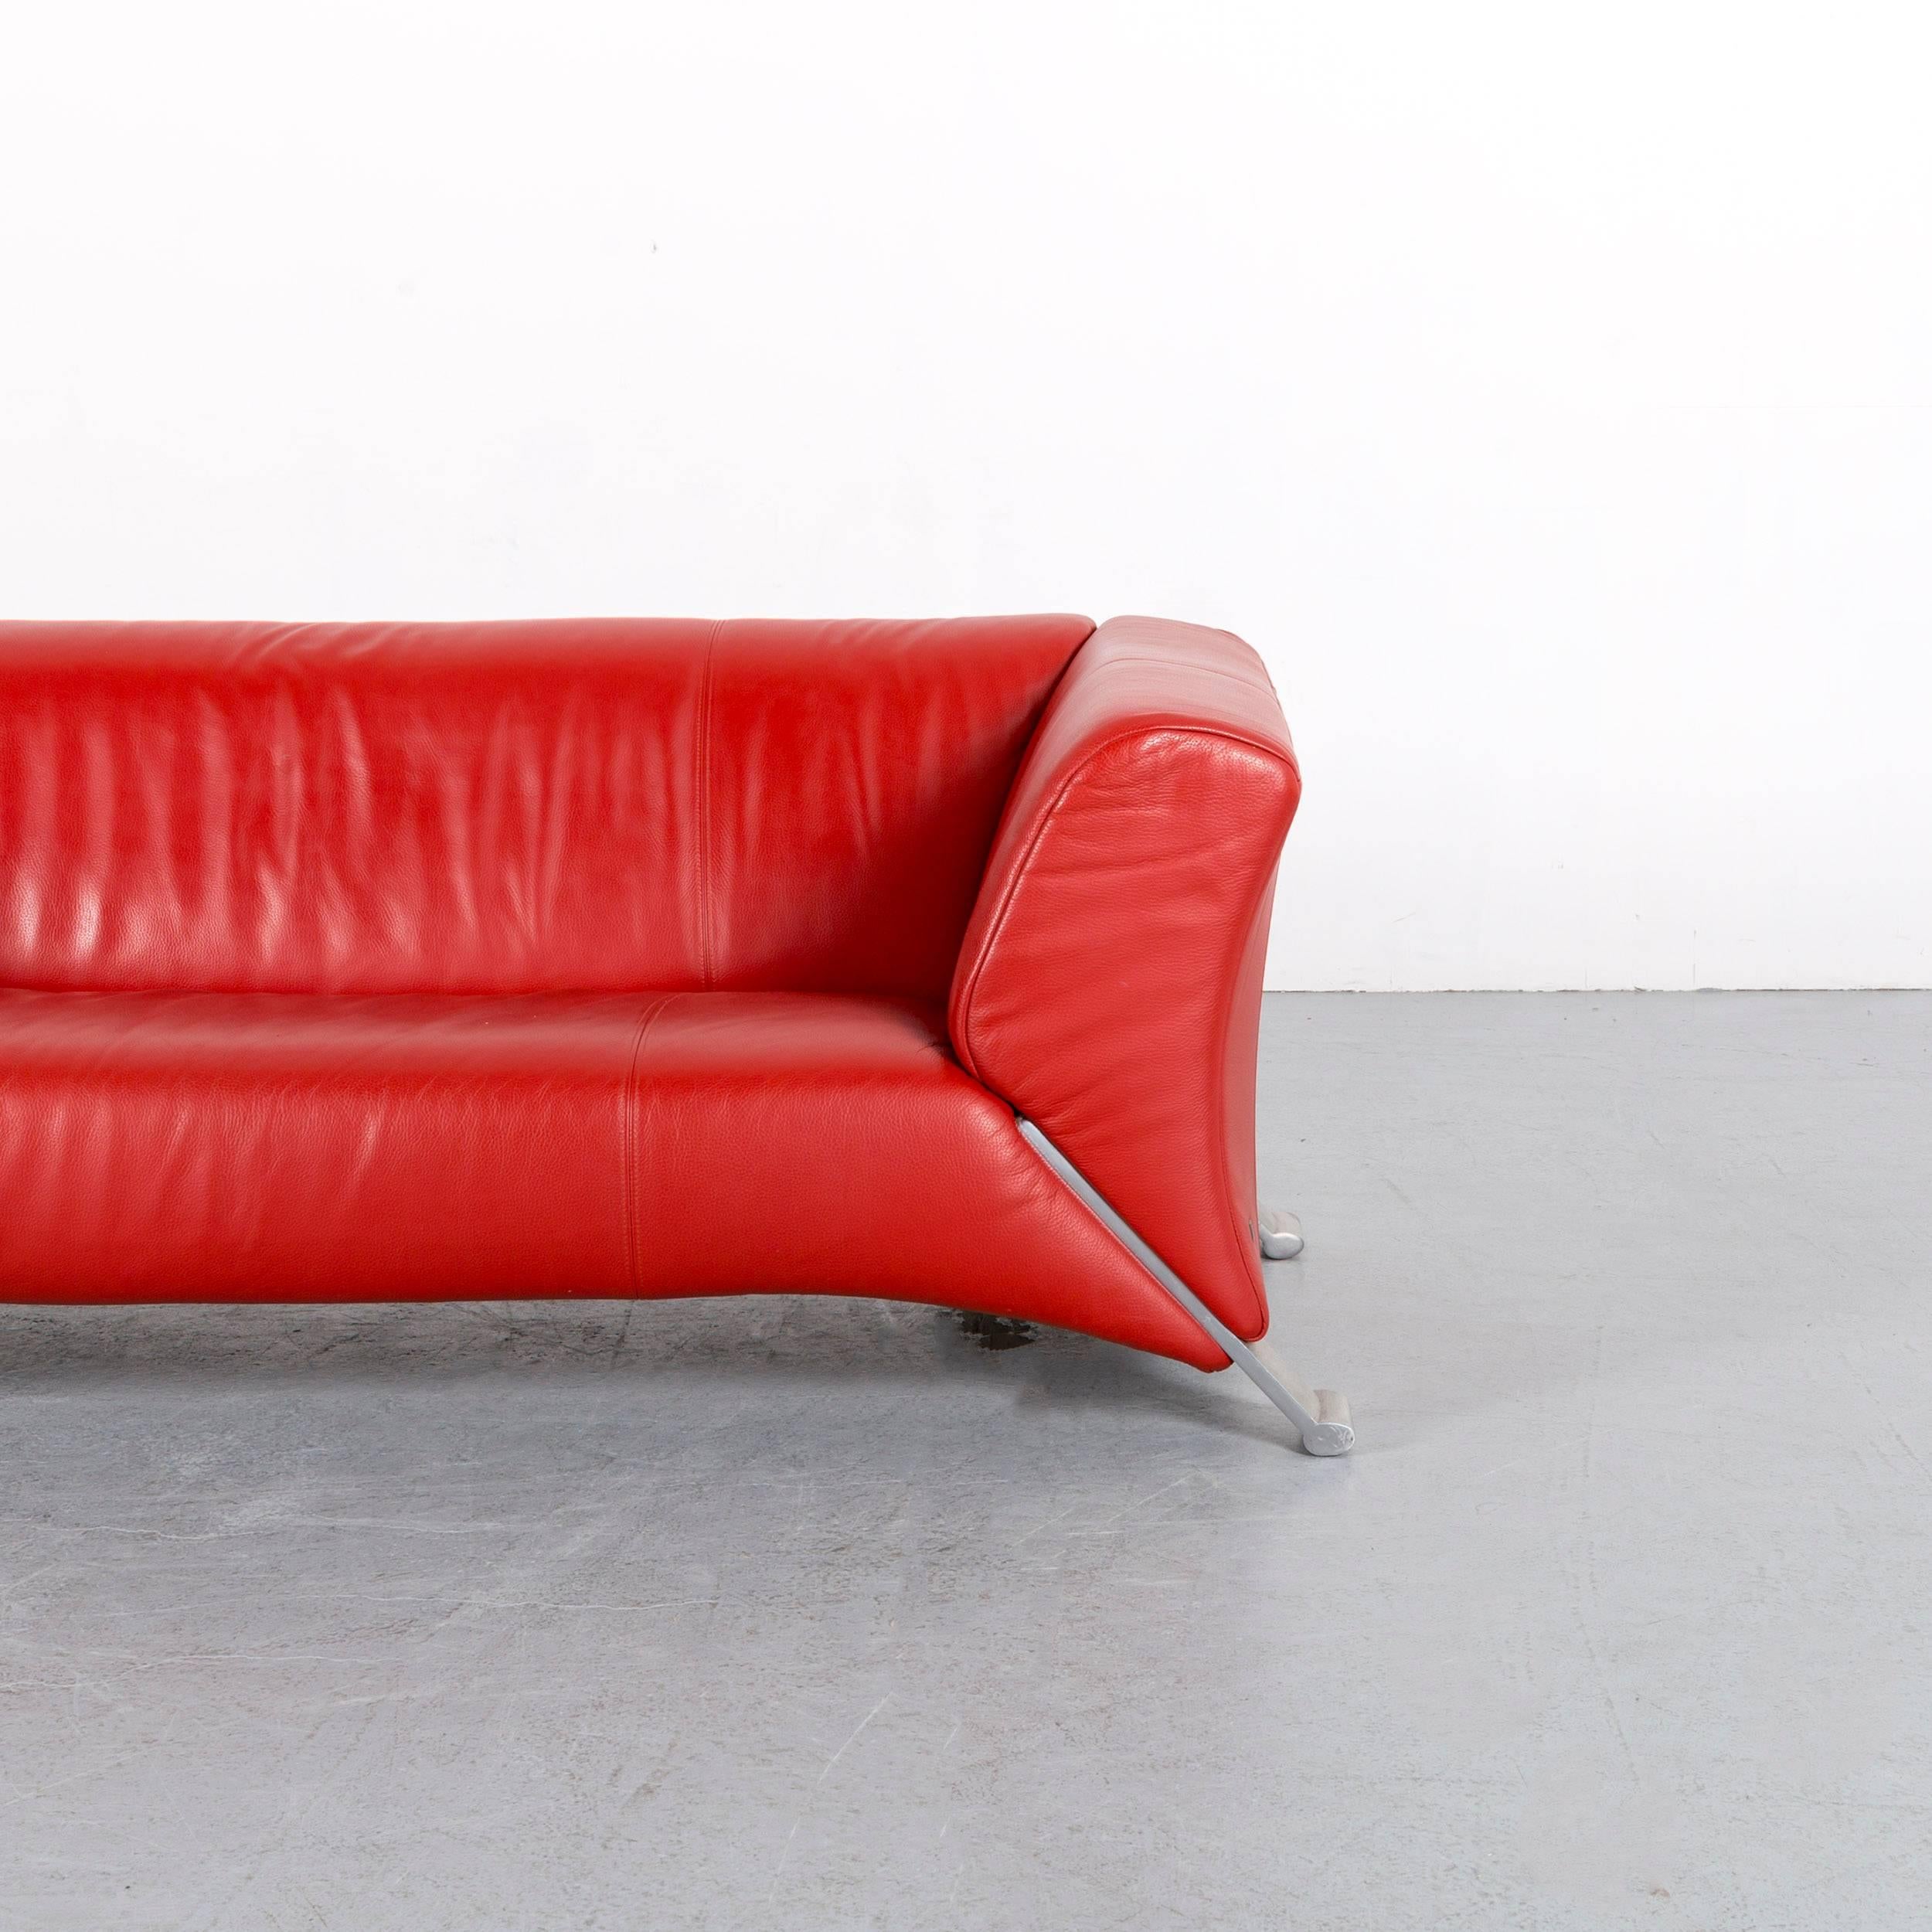 German Rolf Benz 322 Designer Sofa Red Three-Seat Leather Modern Couch Metal Feet